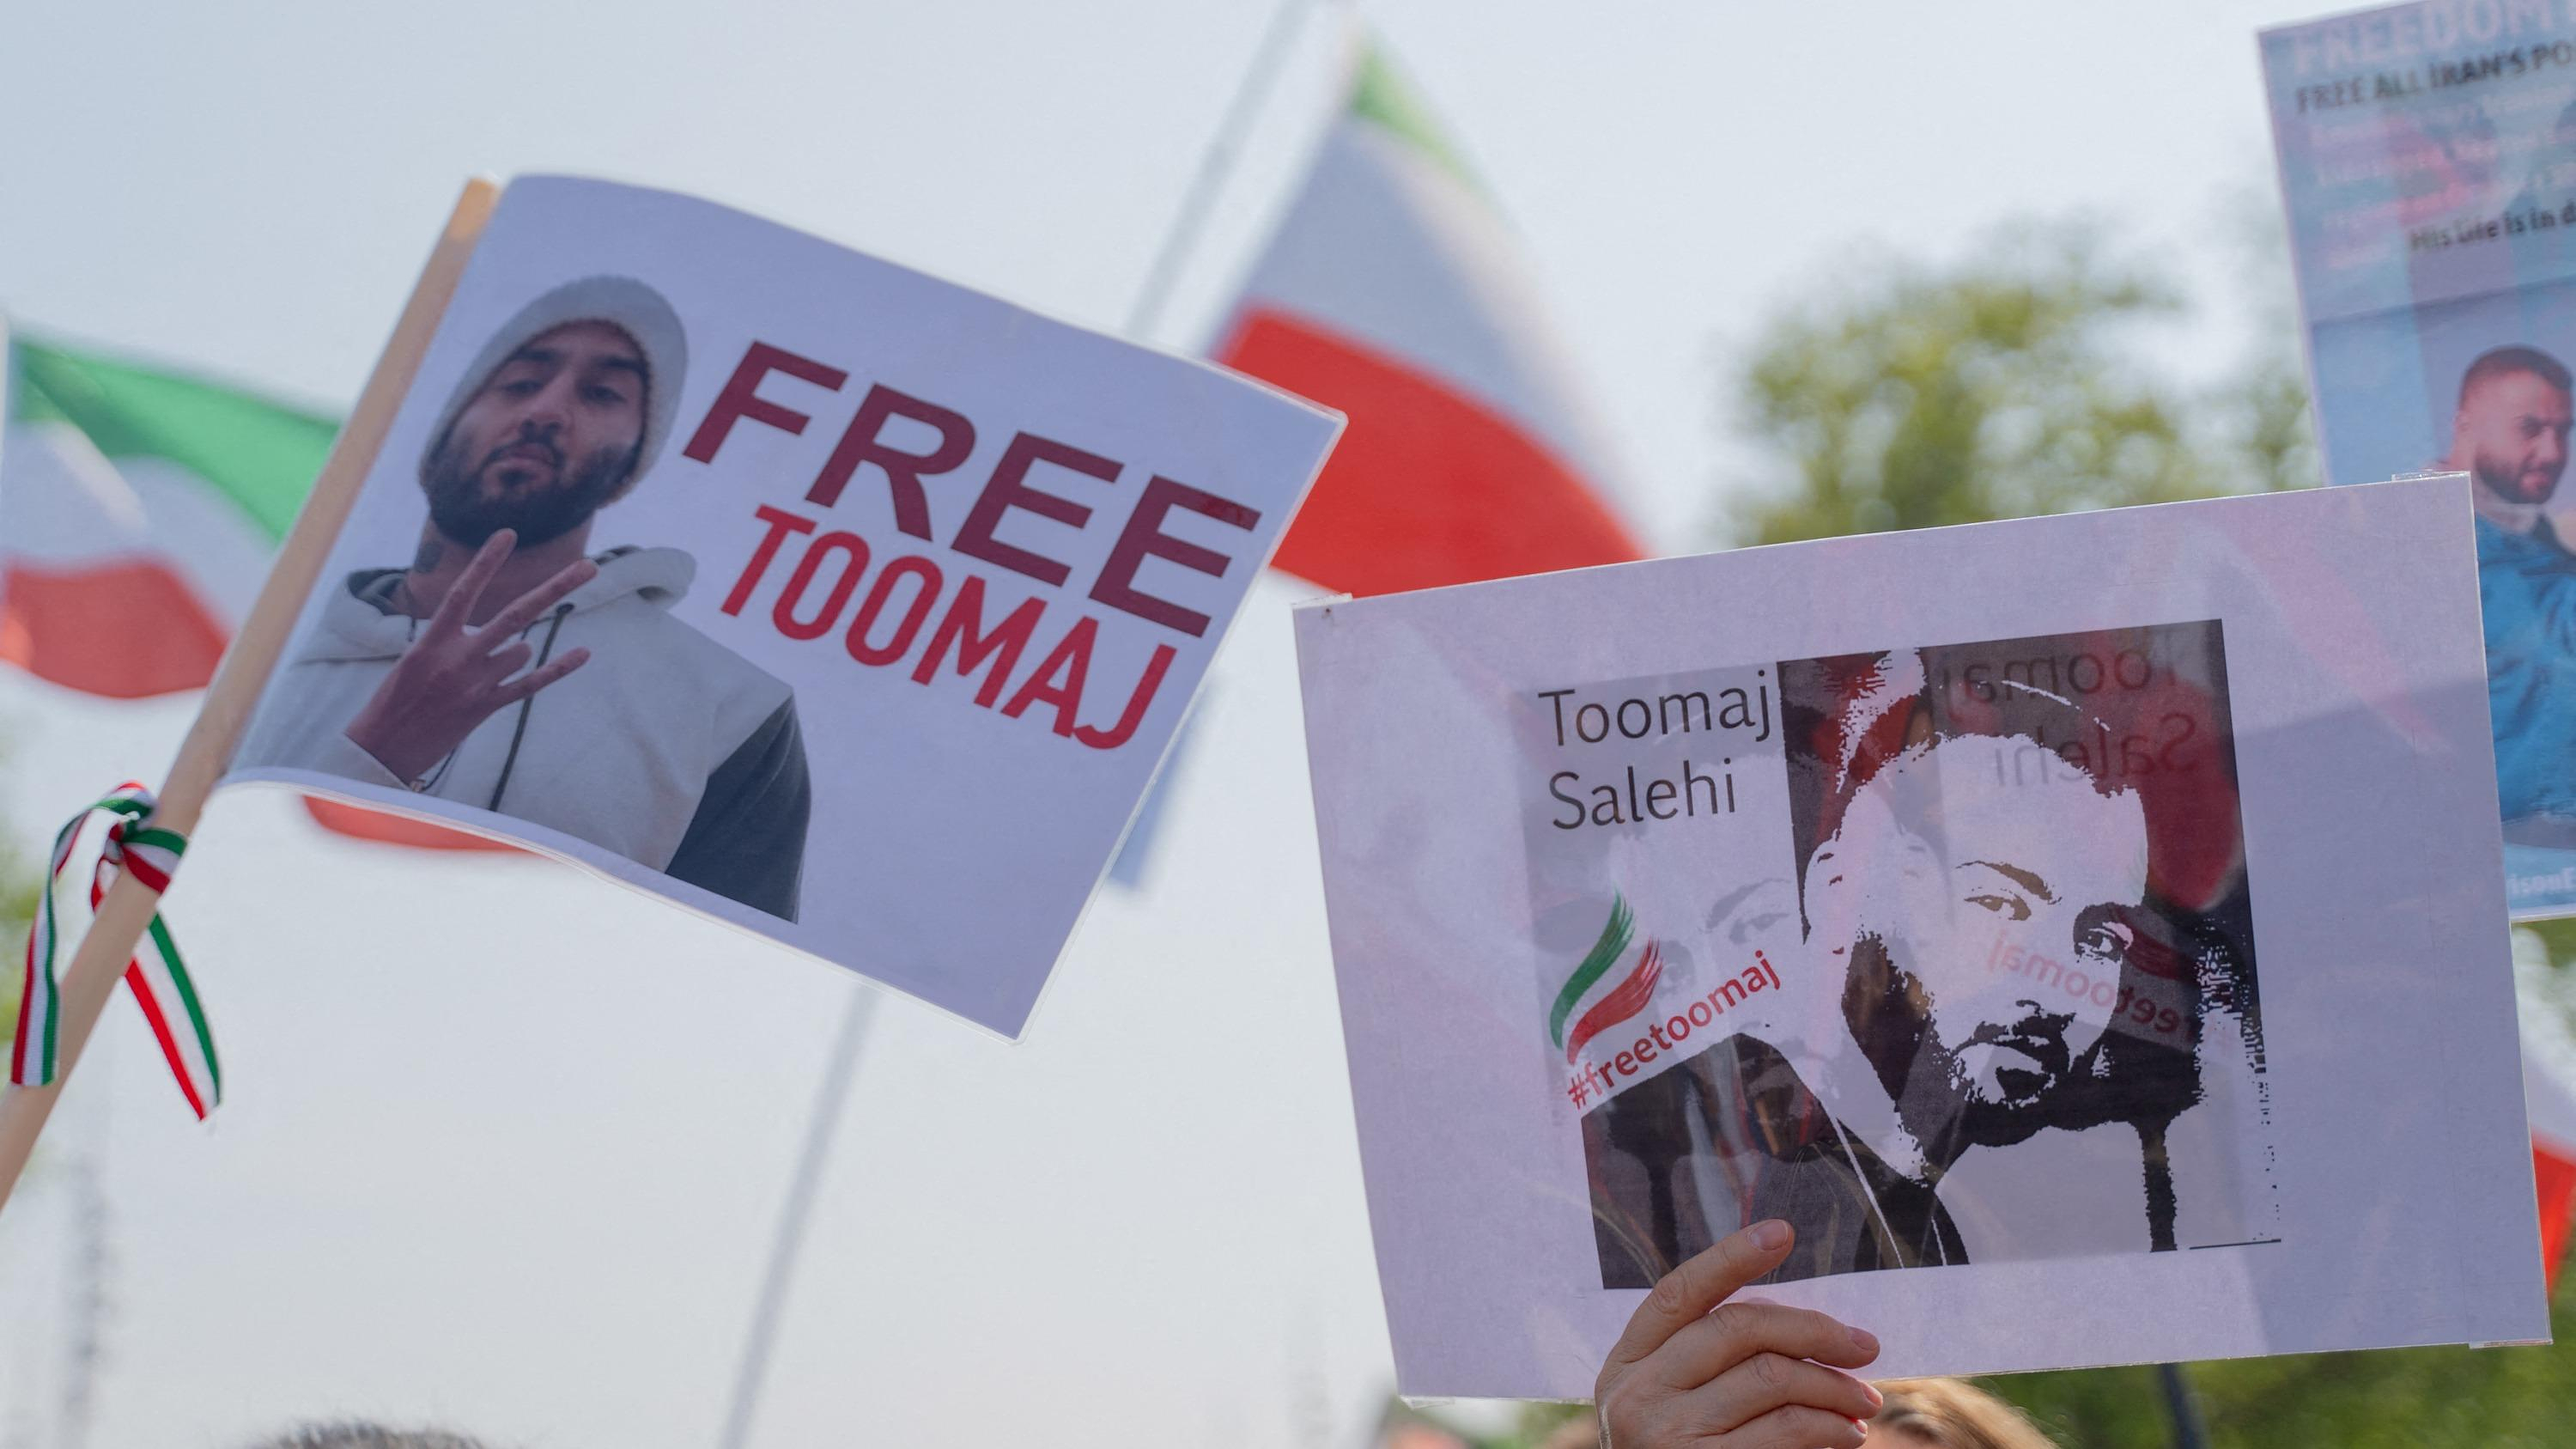 France denounces the death sentence of Iranian rapper Toomaj Salehi